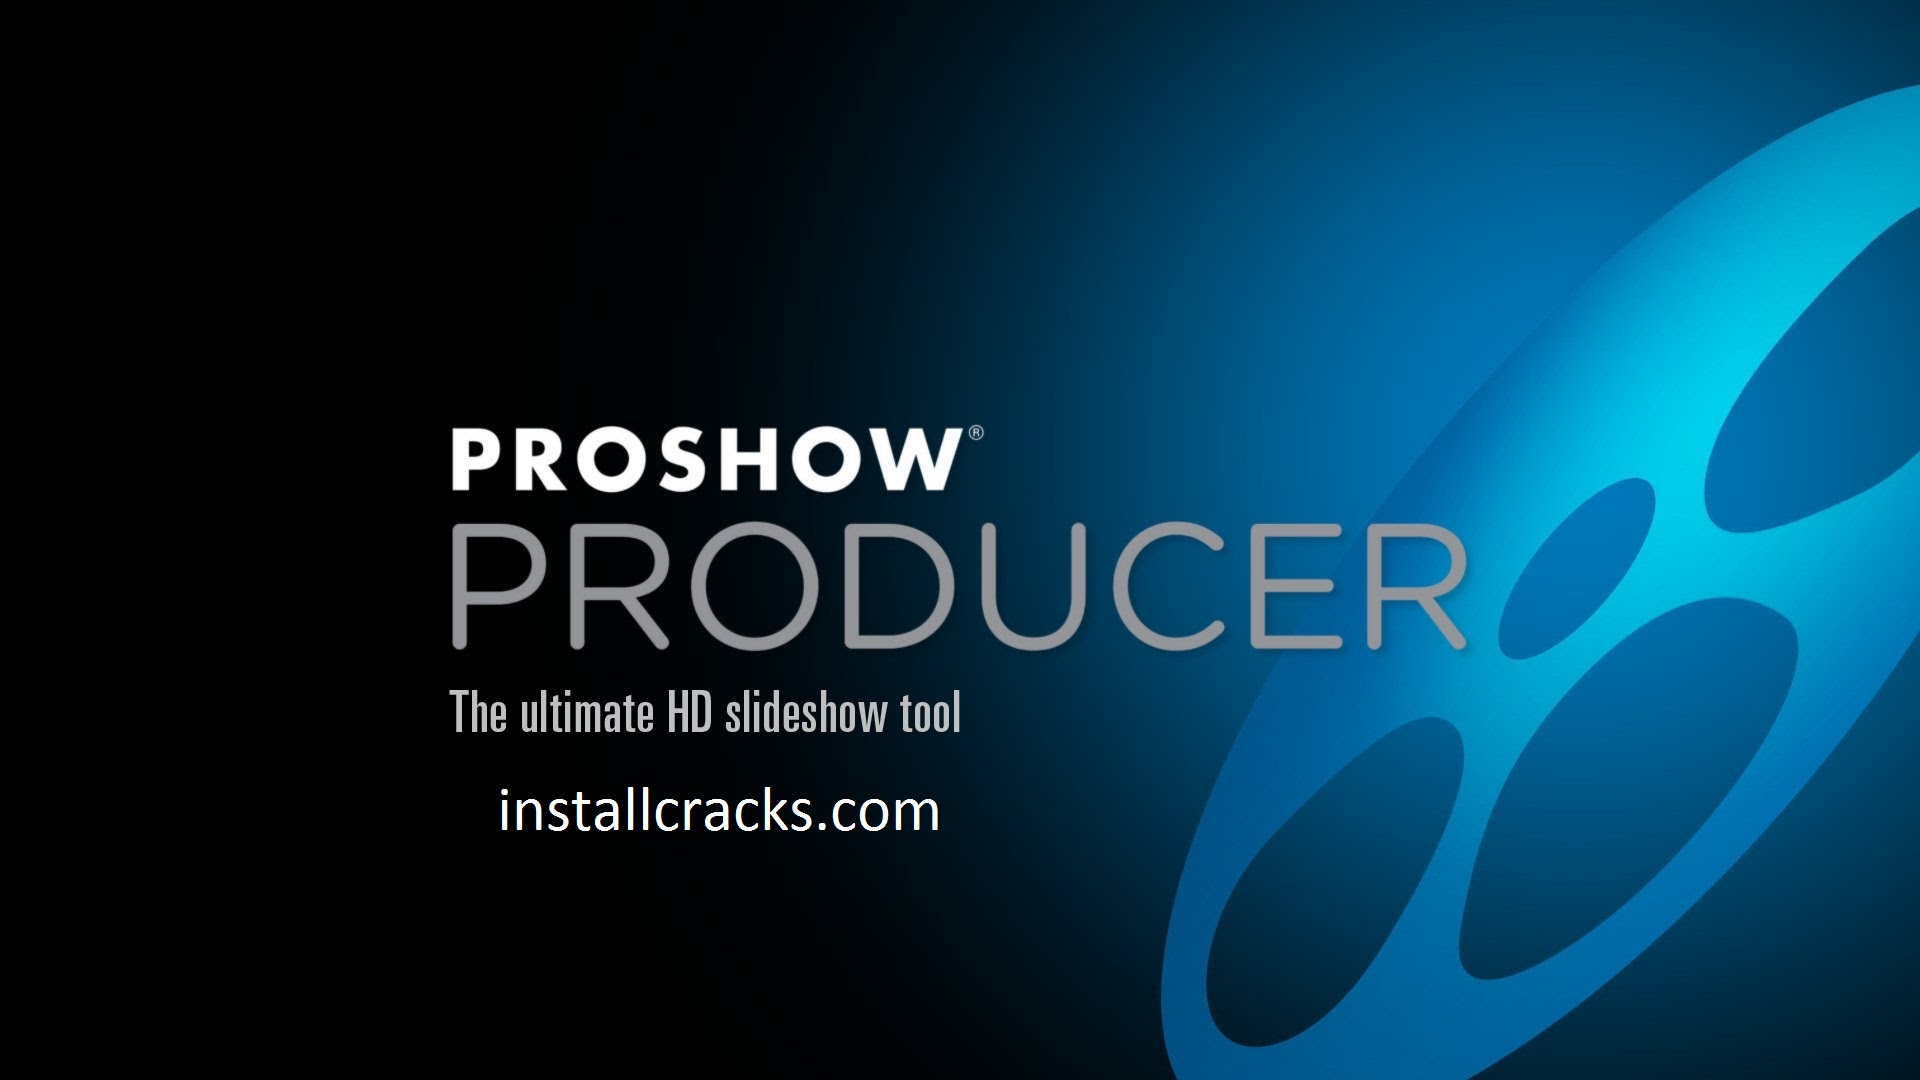 Proshow Producer 